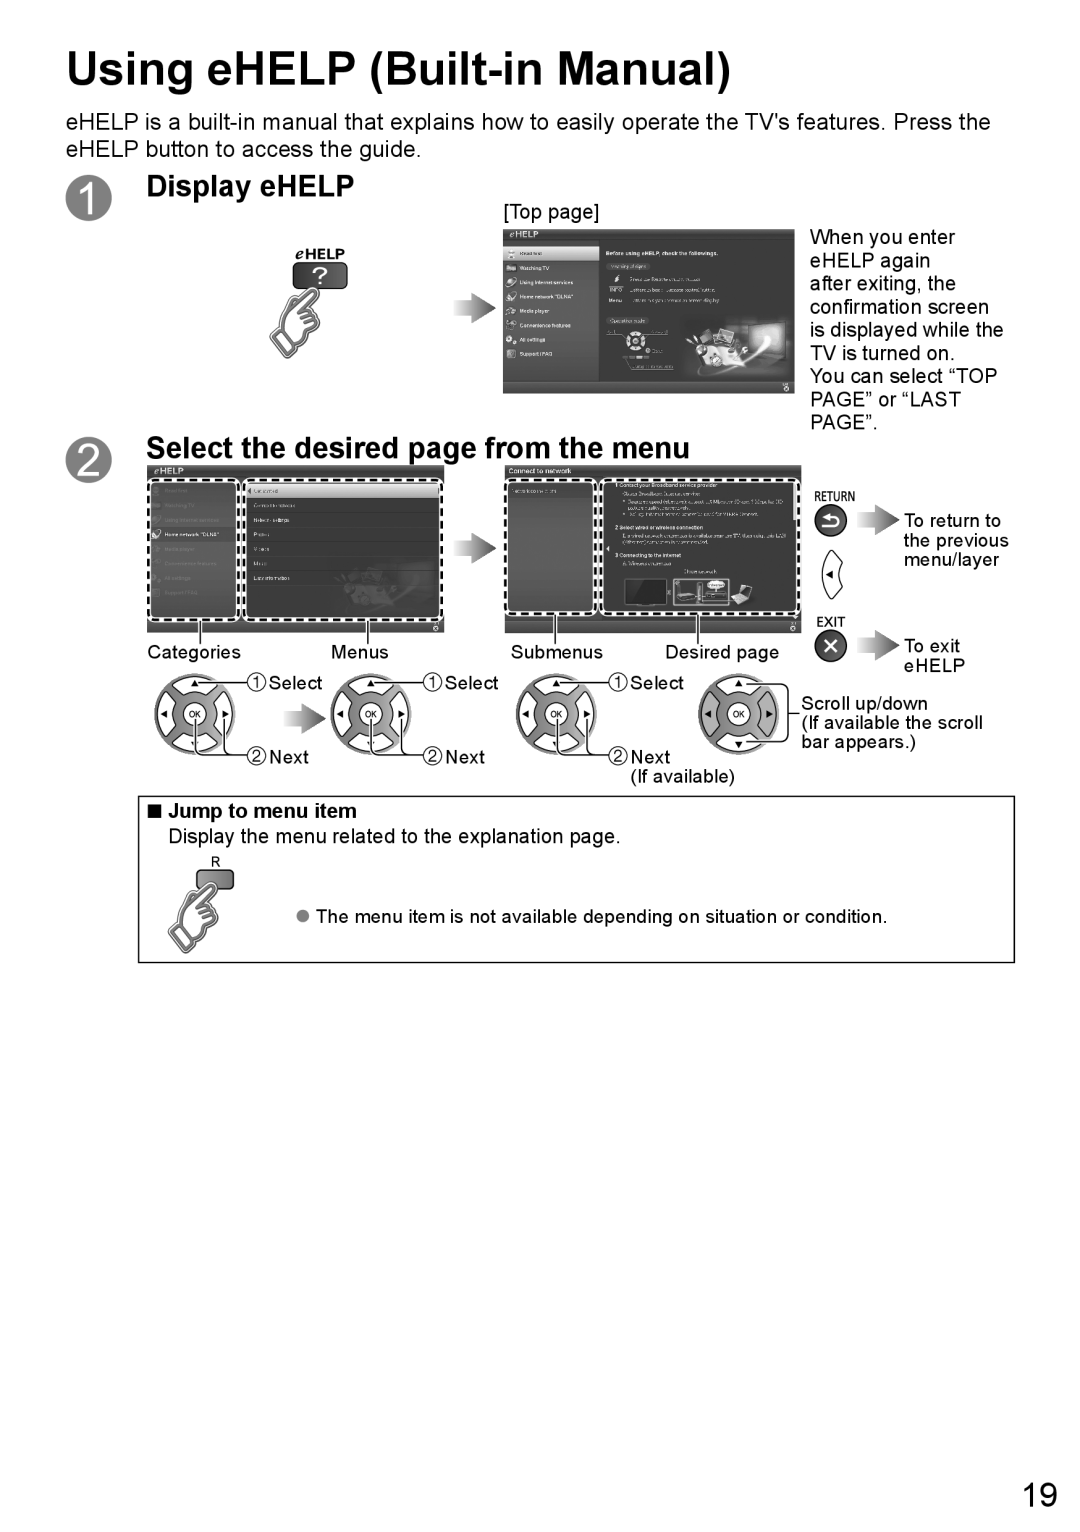 Panasonic TC-58LE64 Using eHELP Built-in Manual, Display eHELP, Select the desired page from the menu, Jump to menu item 